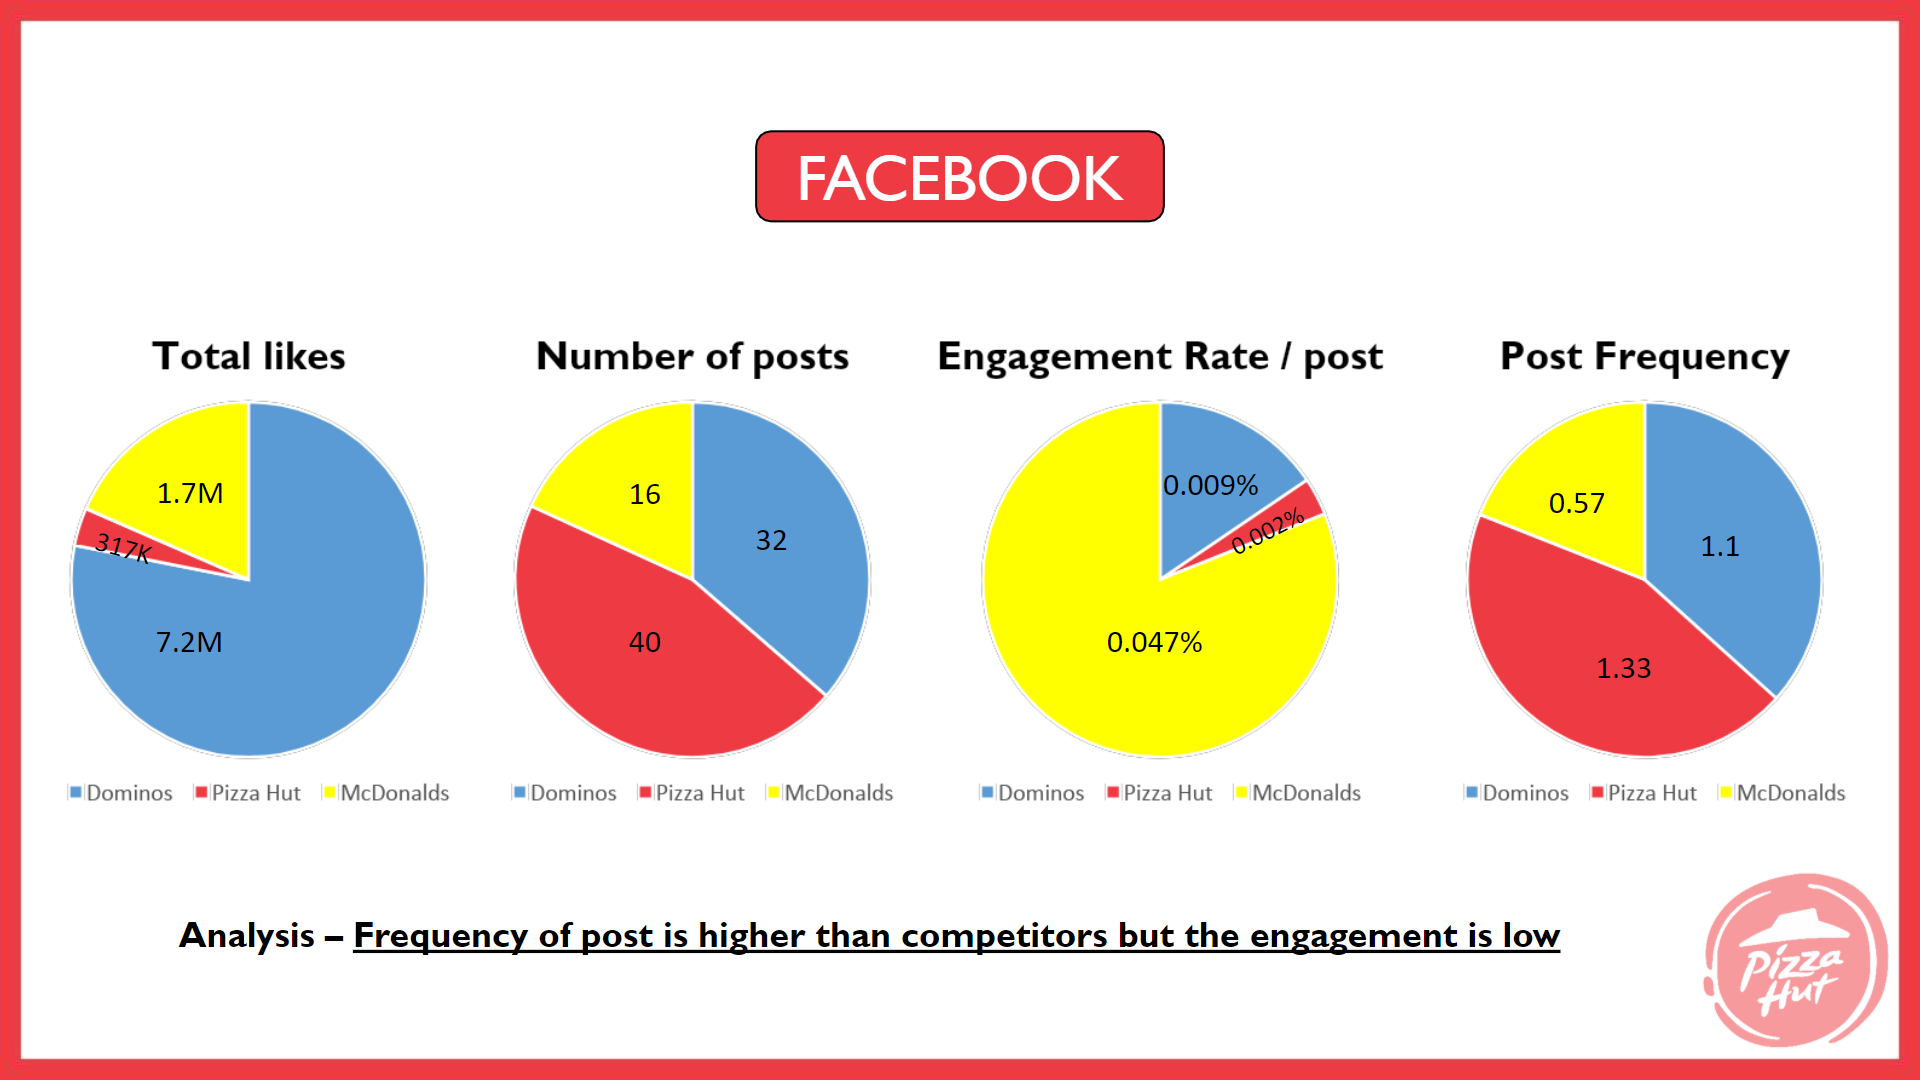 pizza hut marketing strategy Facebook analysis - Pizza Hut Marketing and Advertising Strategy